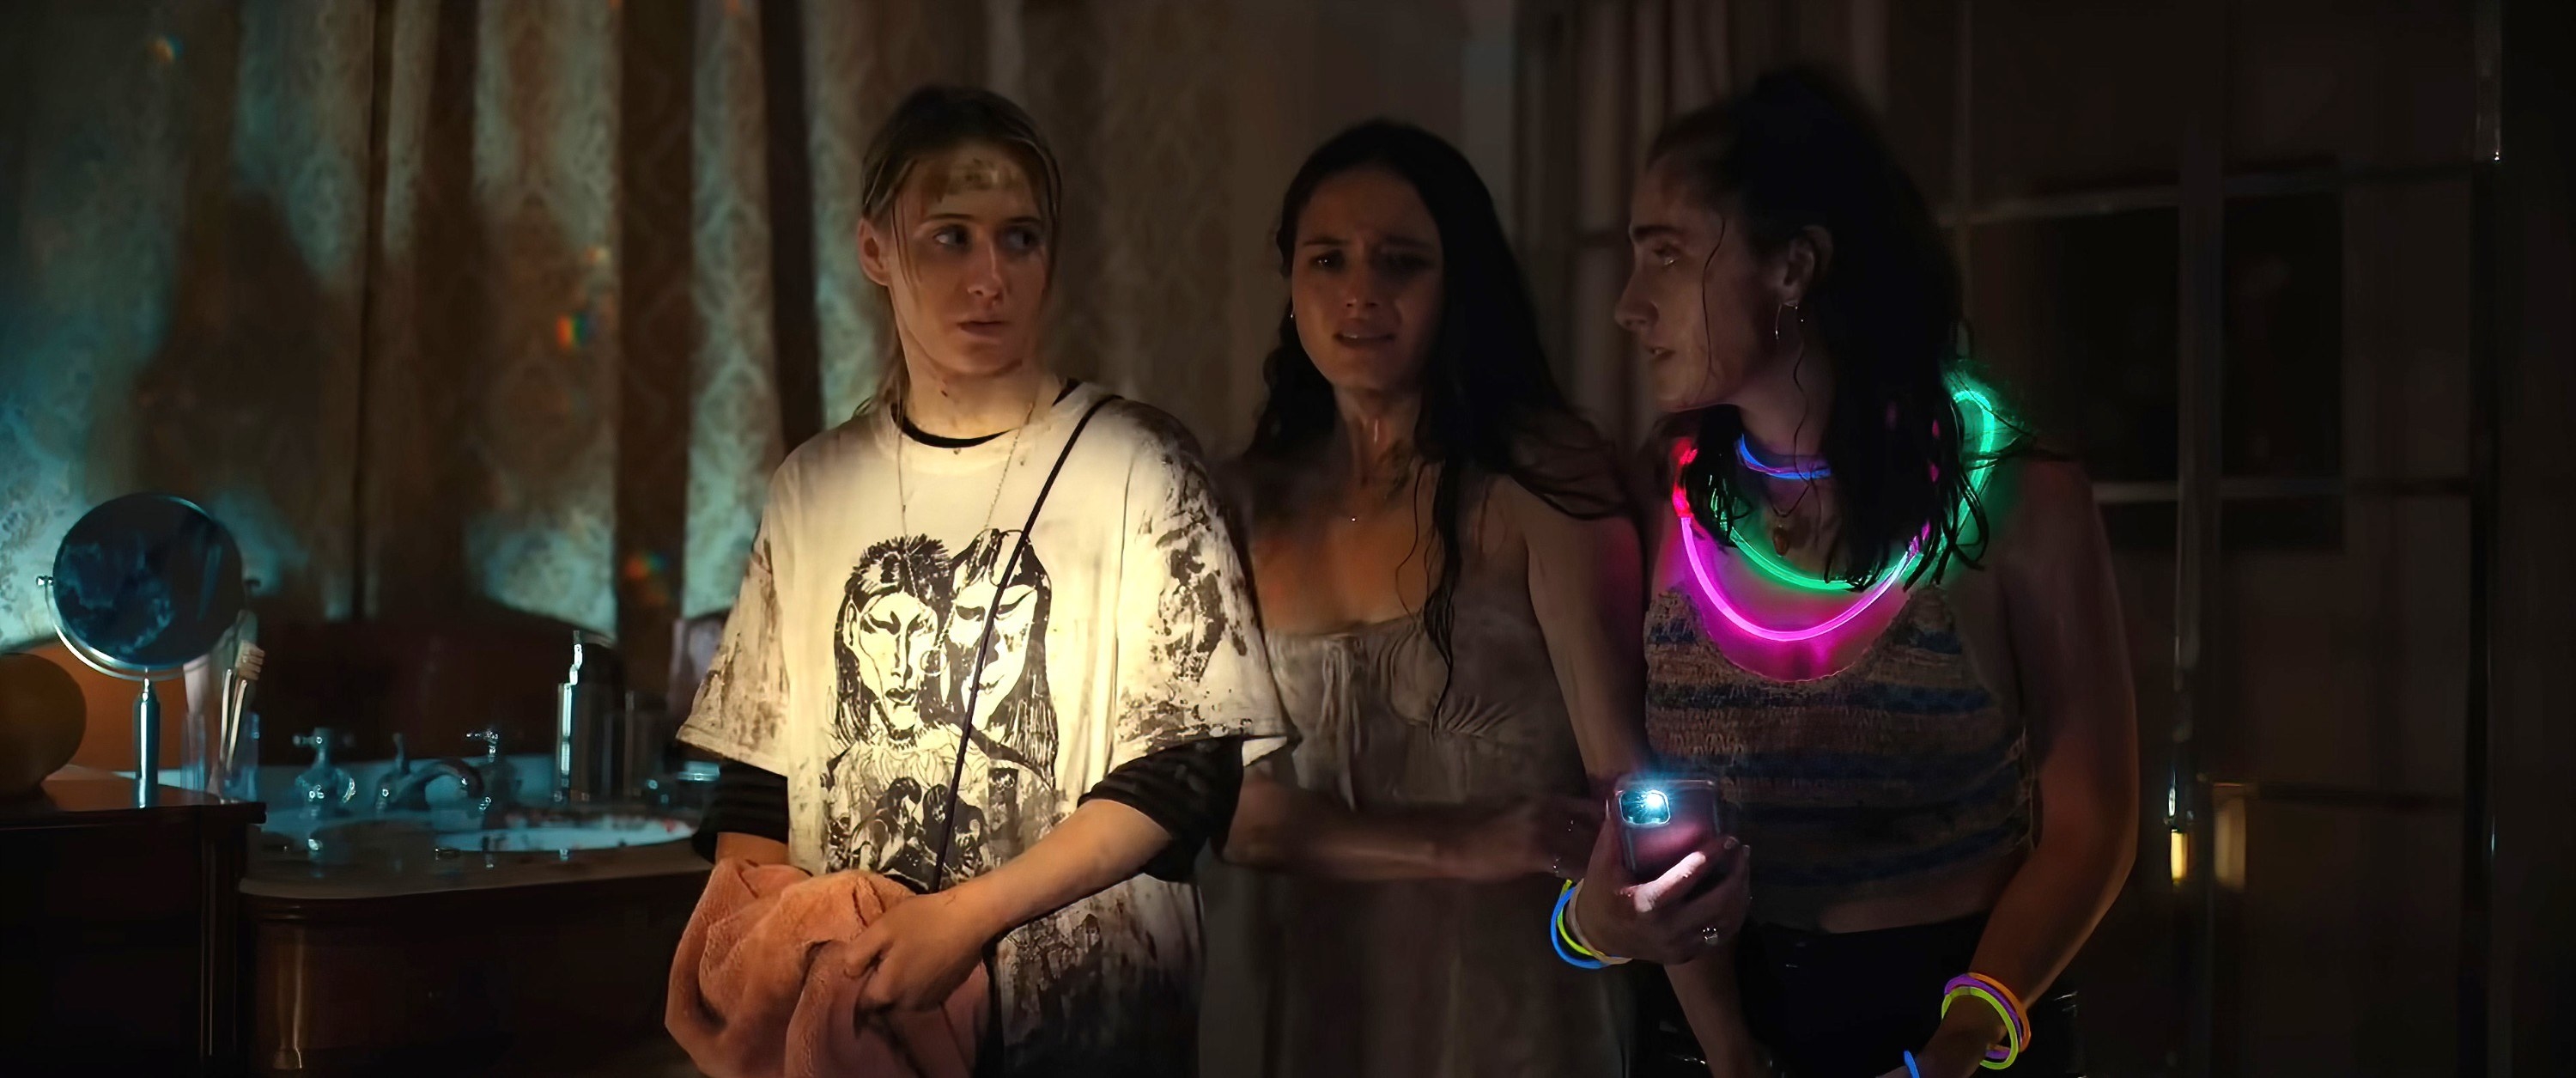 Three of the girls walking in a dark room